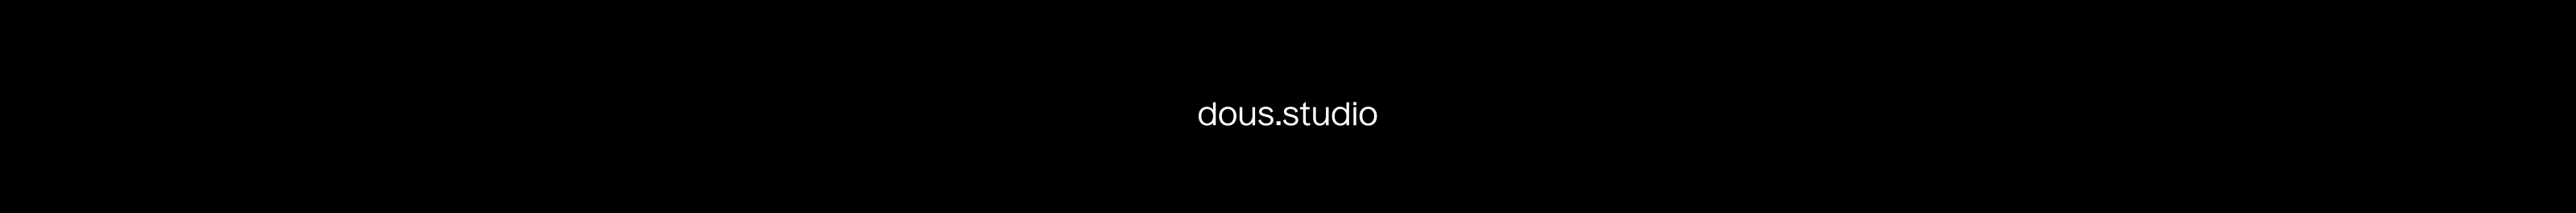 Dous Studio's profile banner